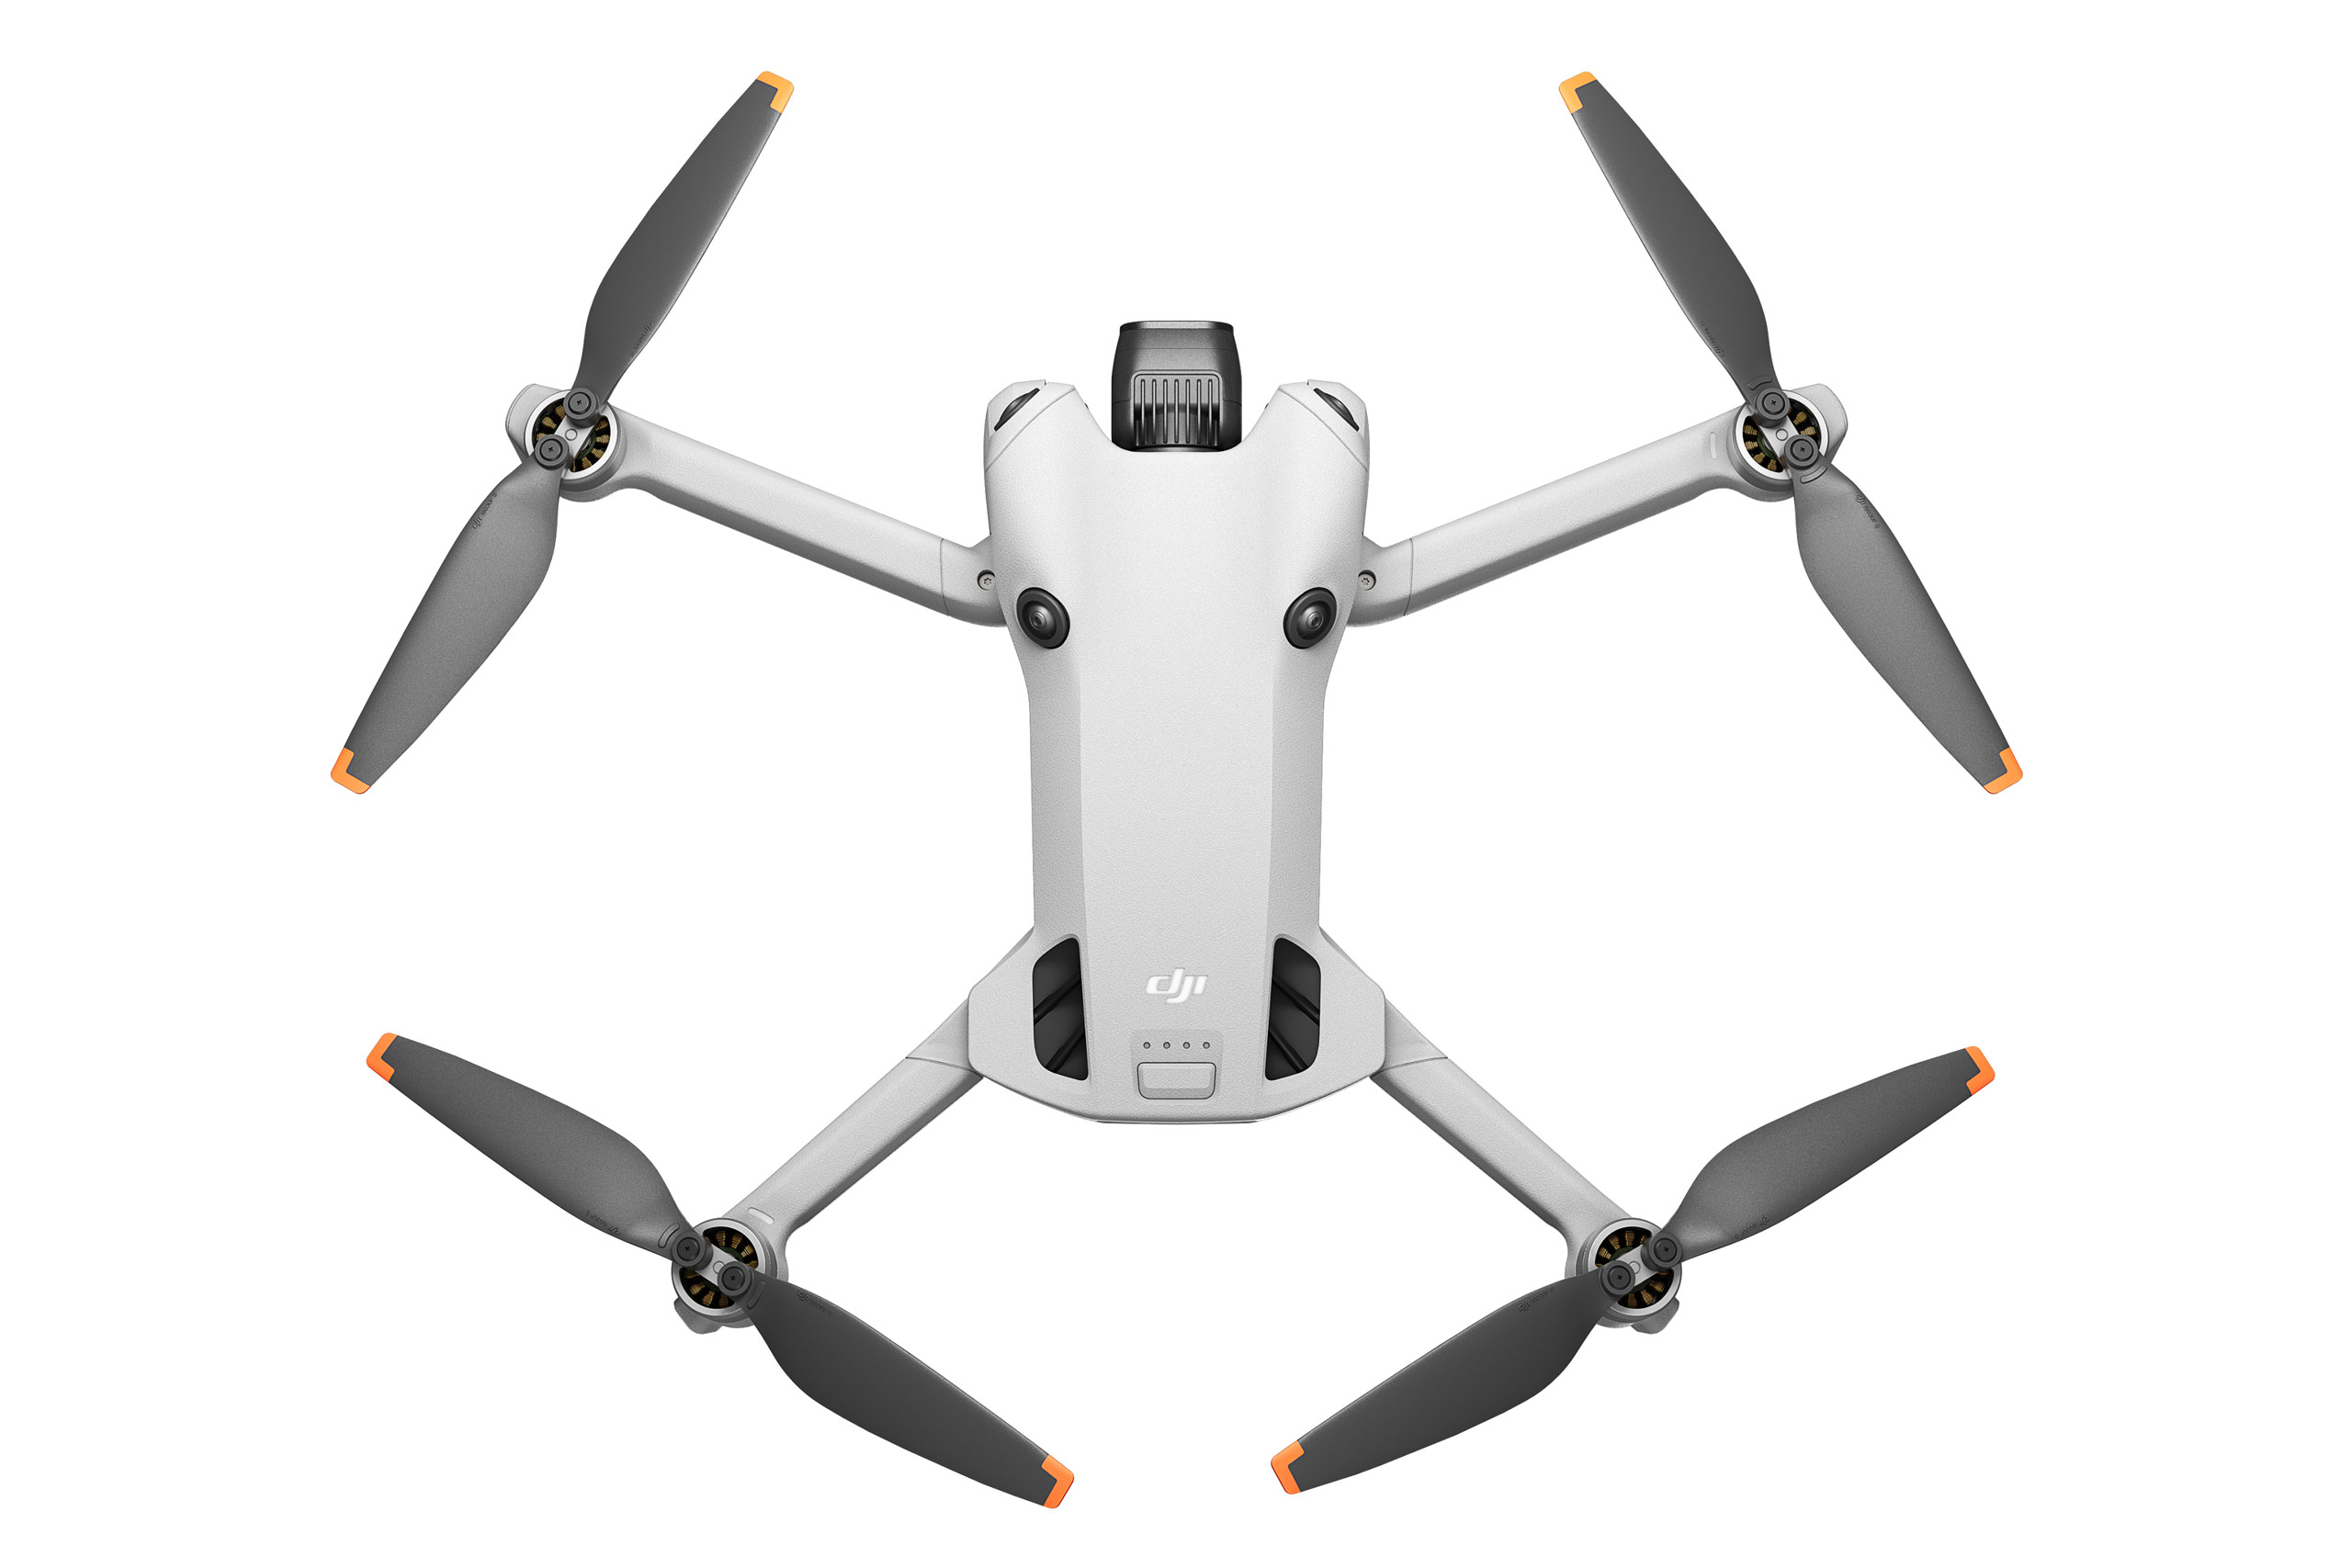 DJI Mini 4 Pro review: DJI embraces top beginner drone features